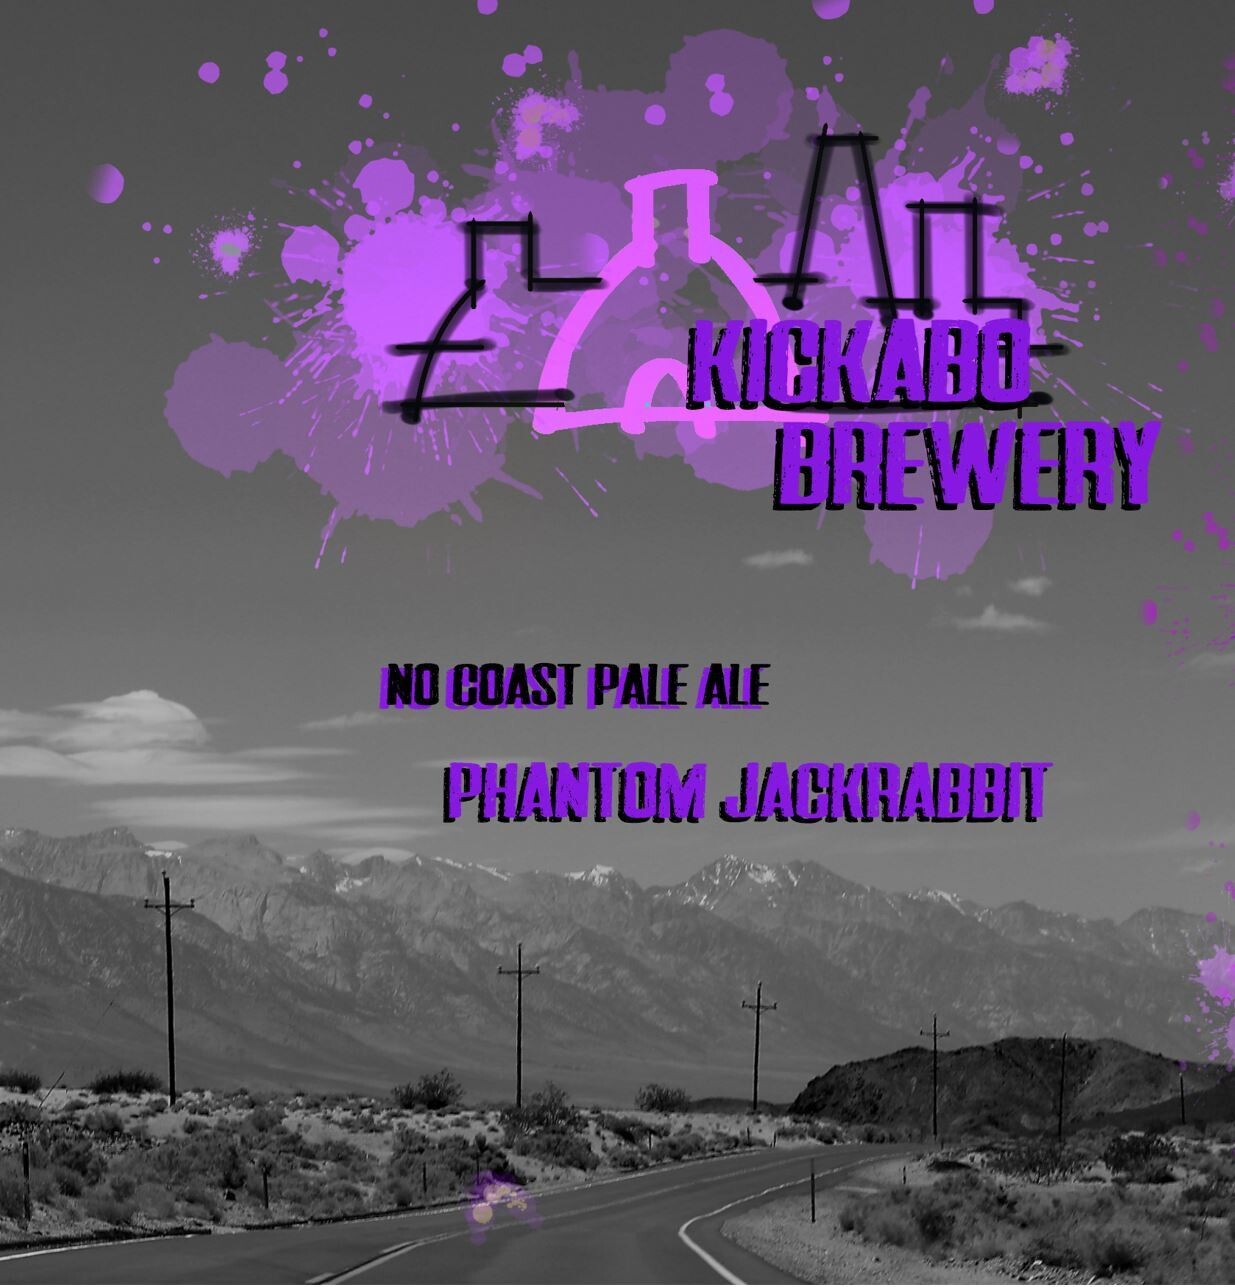 Phantom Jackrabbit | No Coast Pale Ale